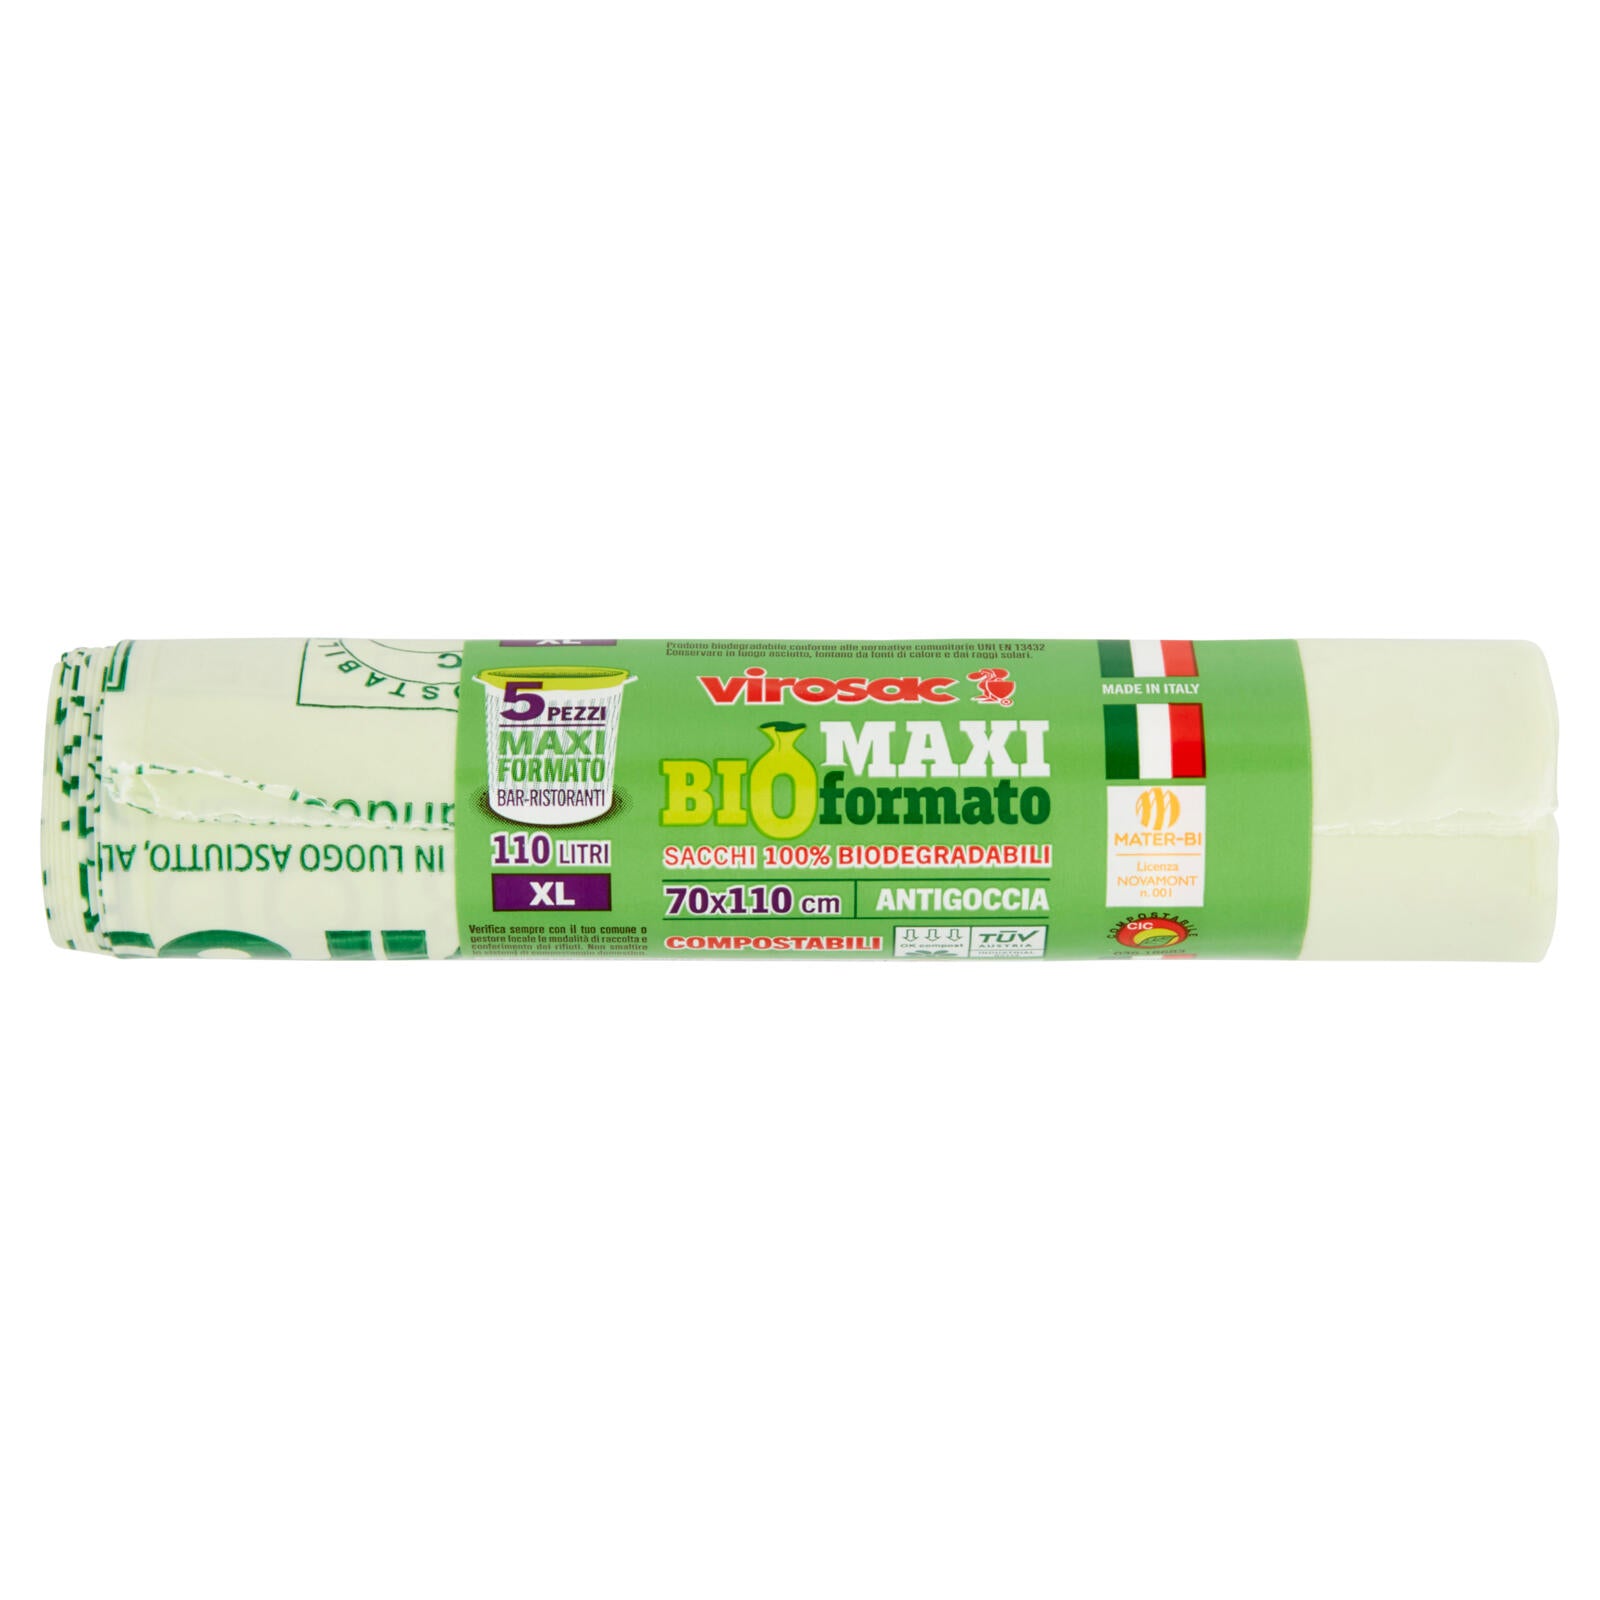 virosac Bio Maxi formato Sacchi 100% Biodegradabili 70x110 cm 110 Litri 5 pz